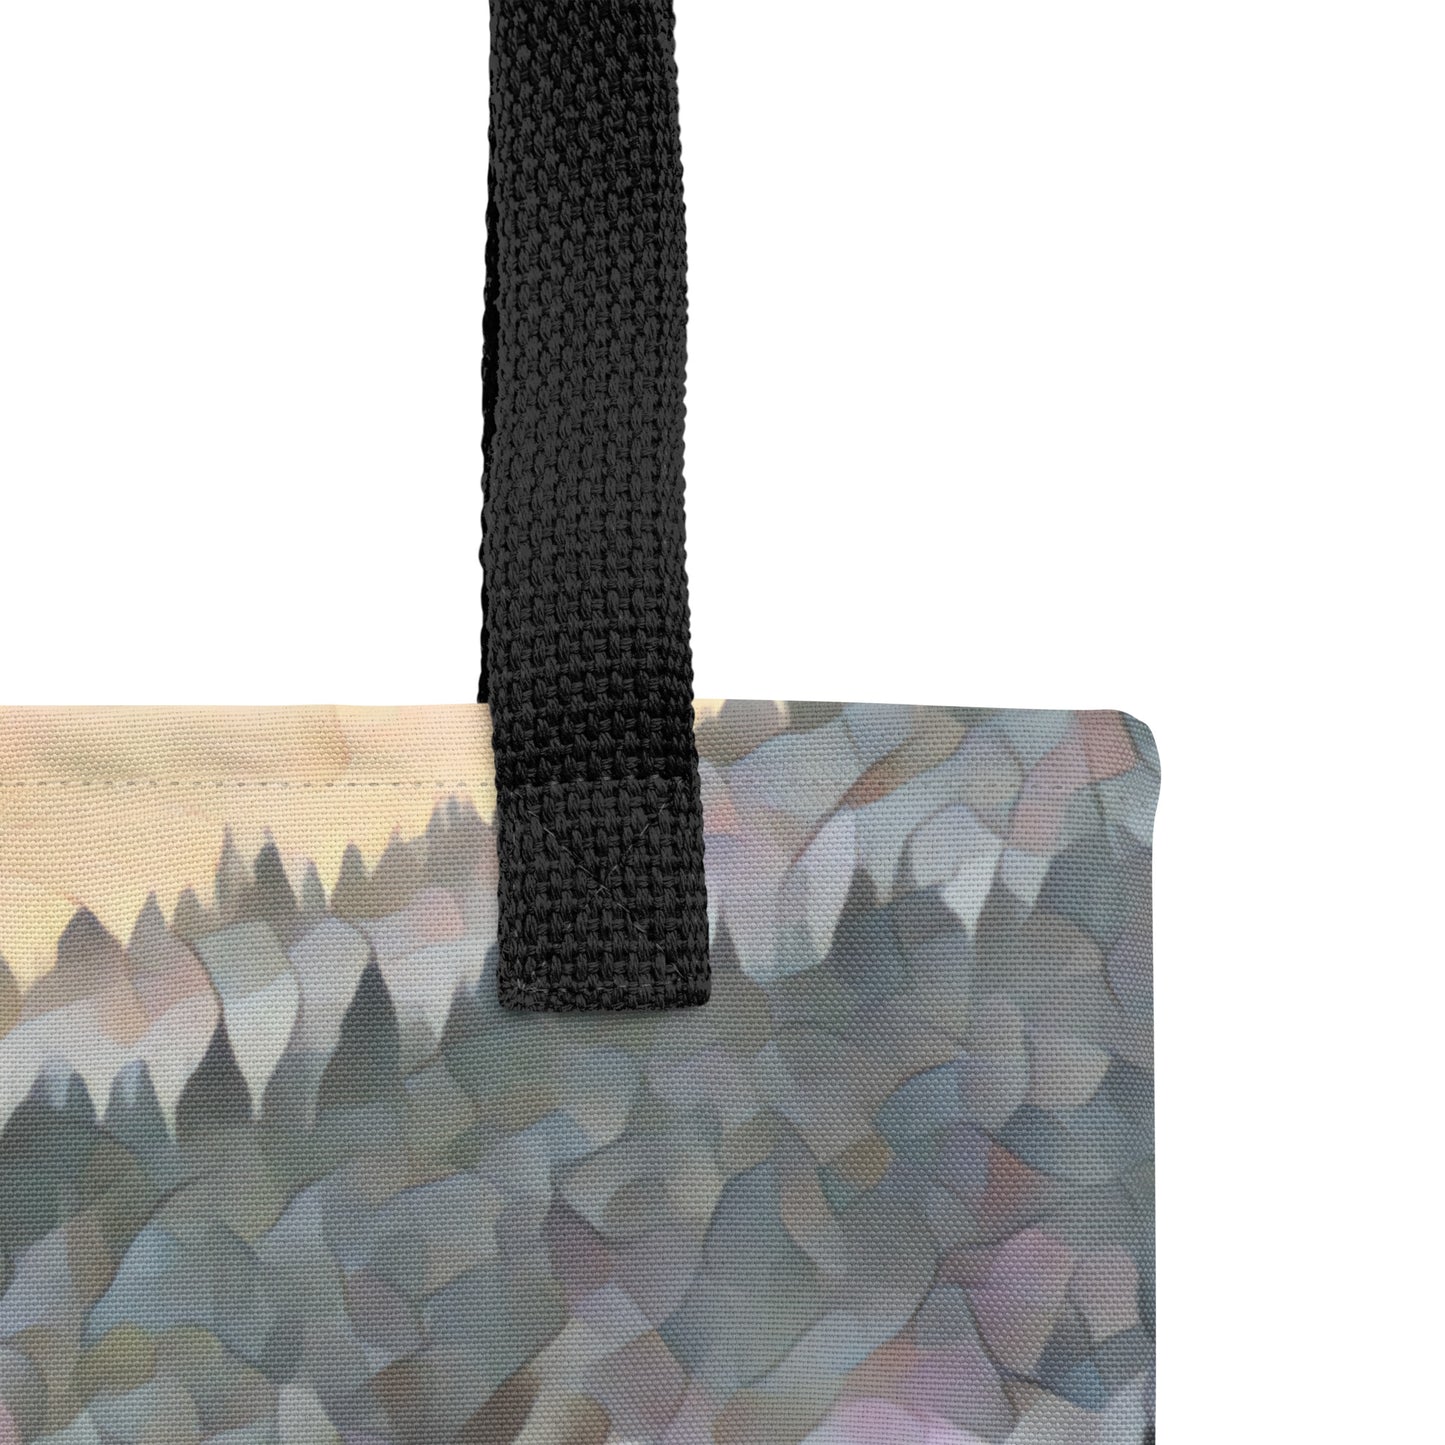 Oregon Running Horse - Digital Art - Tote bag